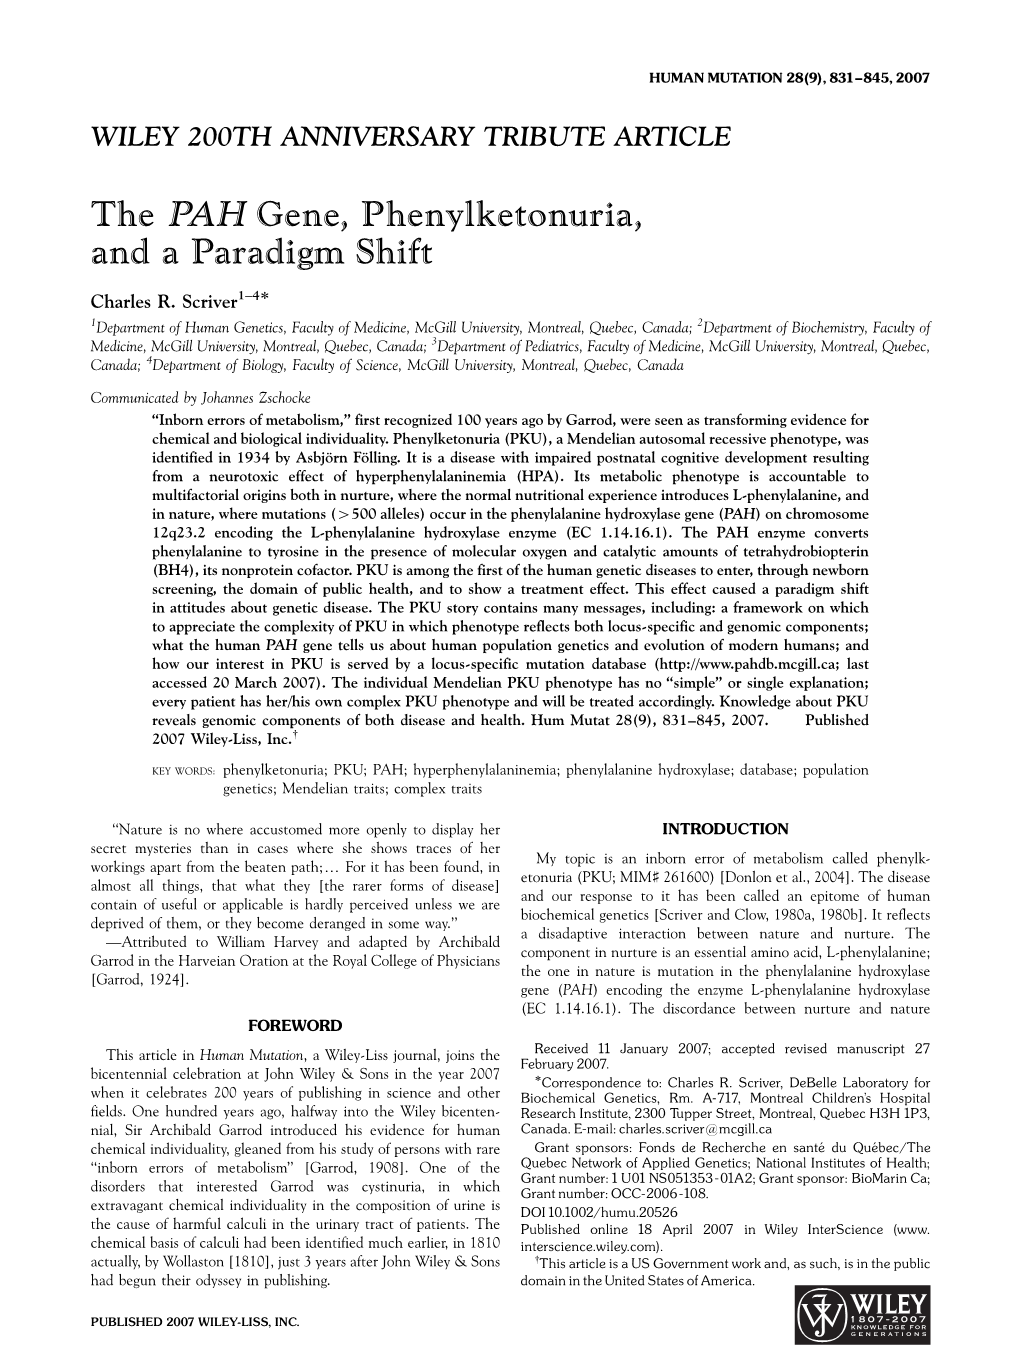 The PAH Gene, Phenylketonuria, and a Paradigm Shift